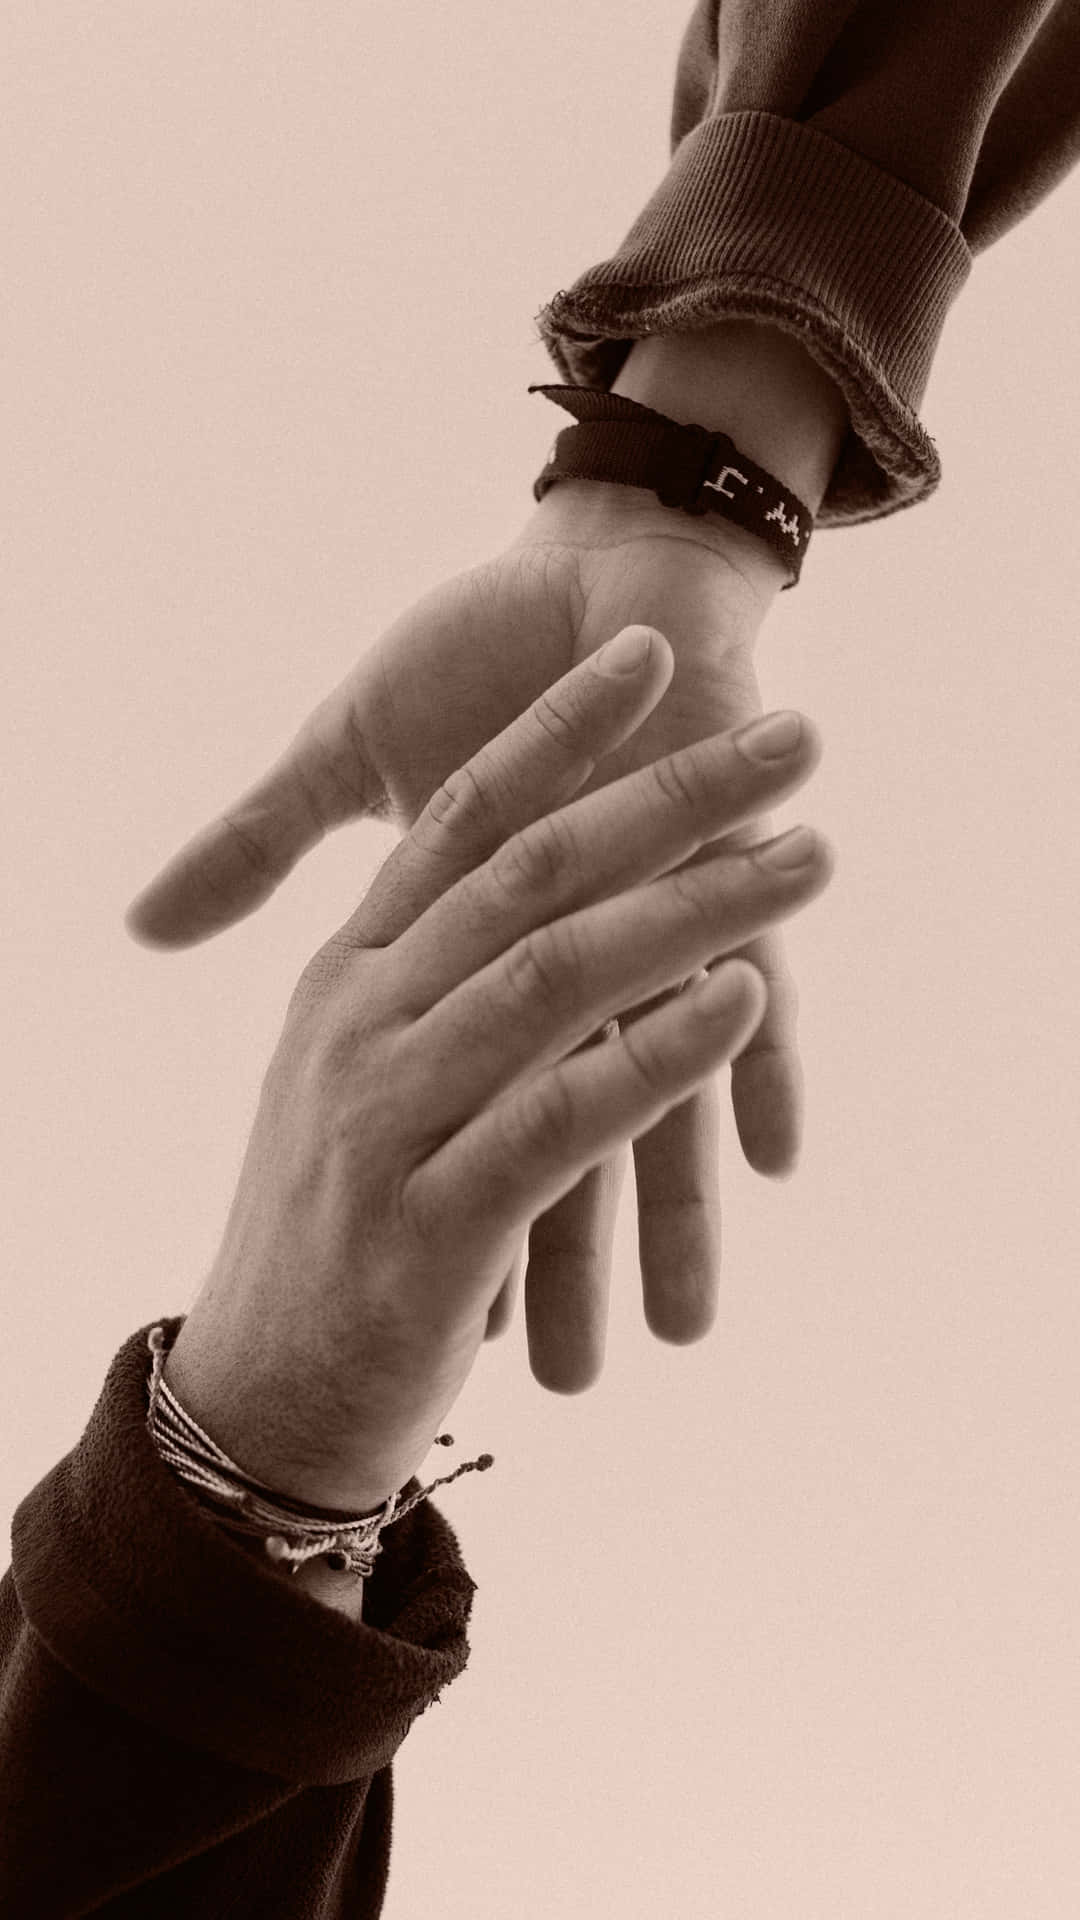 Gentle Handshake With Bracelets Background